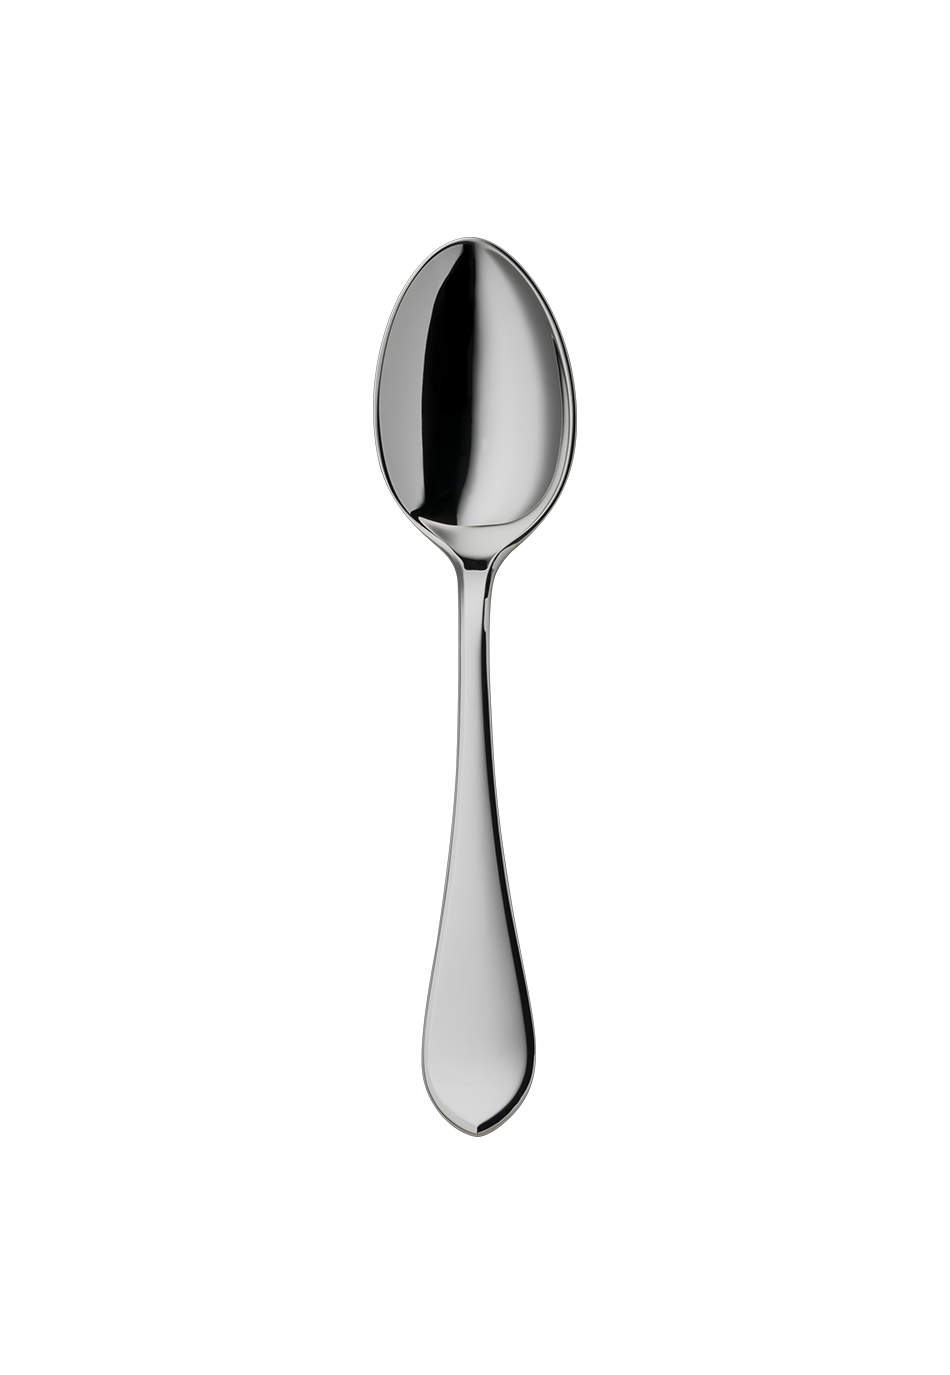 Eclipse Dessert Spoon (150g massive silverplated)